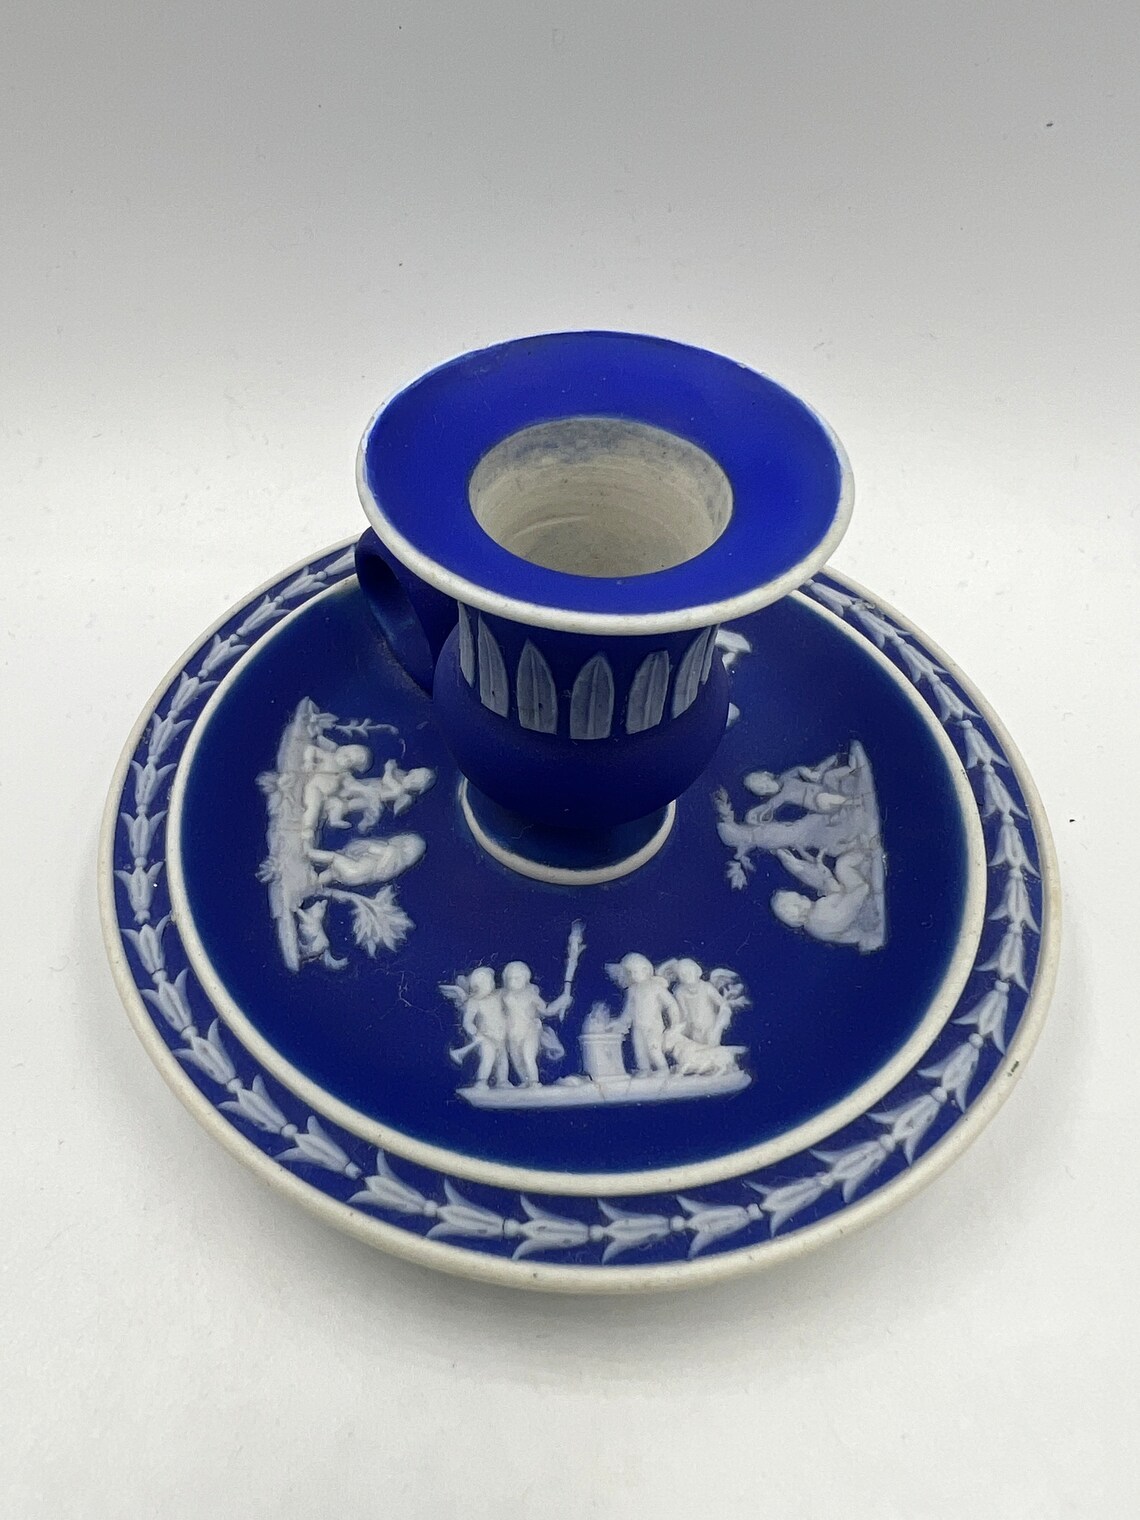 Rare Wedgwood dark blue jasperware candle holder - $58.95